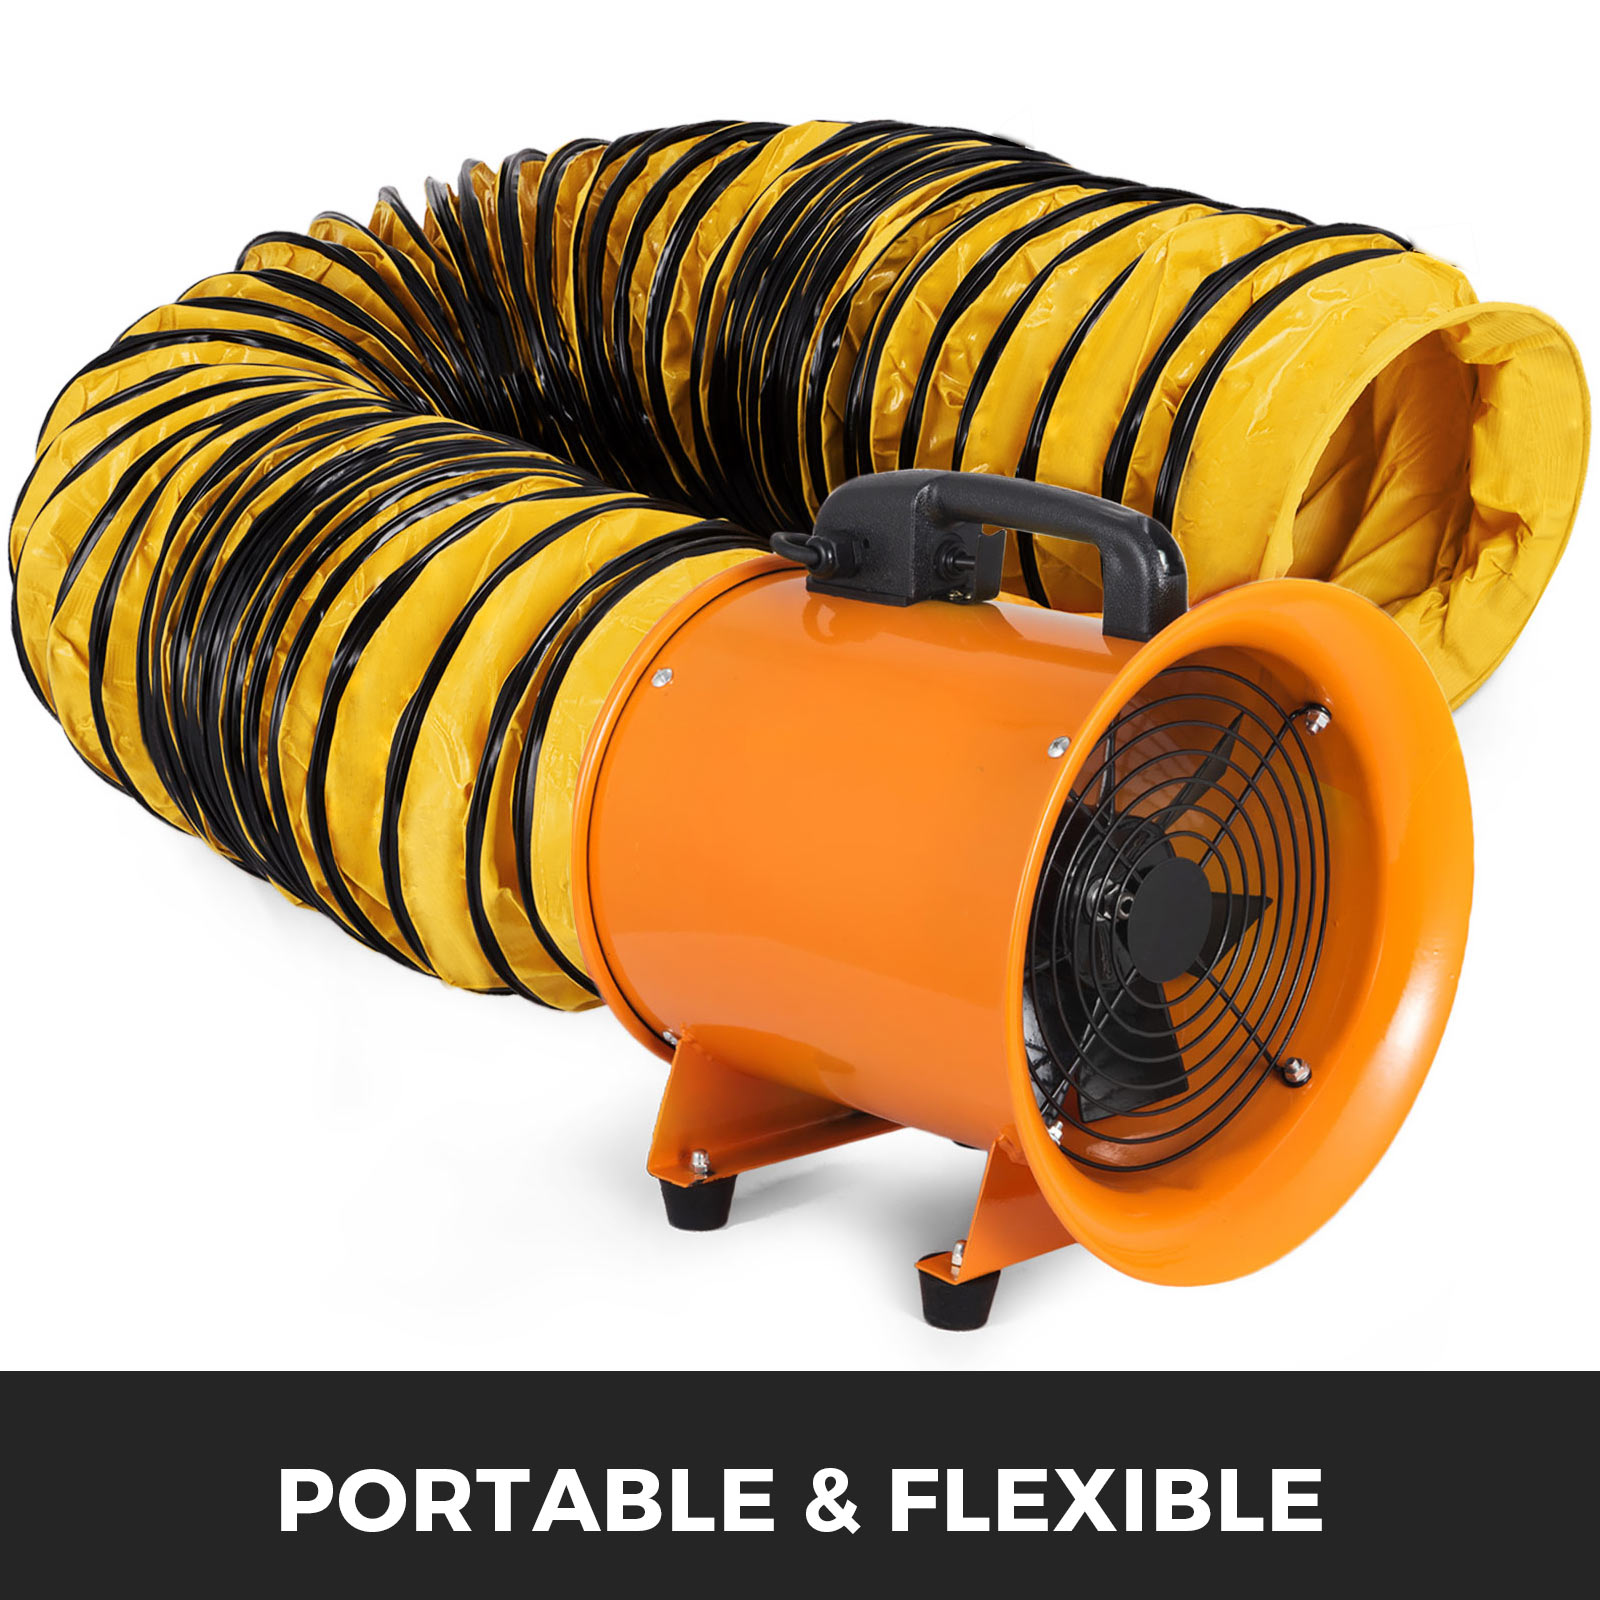 PVC flexible ducting industrial portable ventilator extractor hose heavy duty